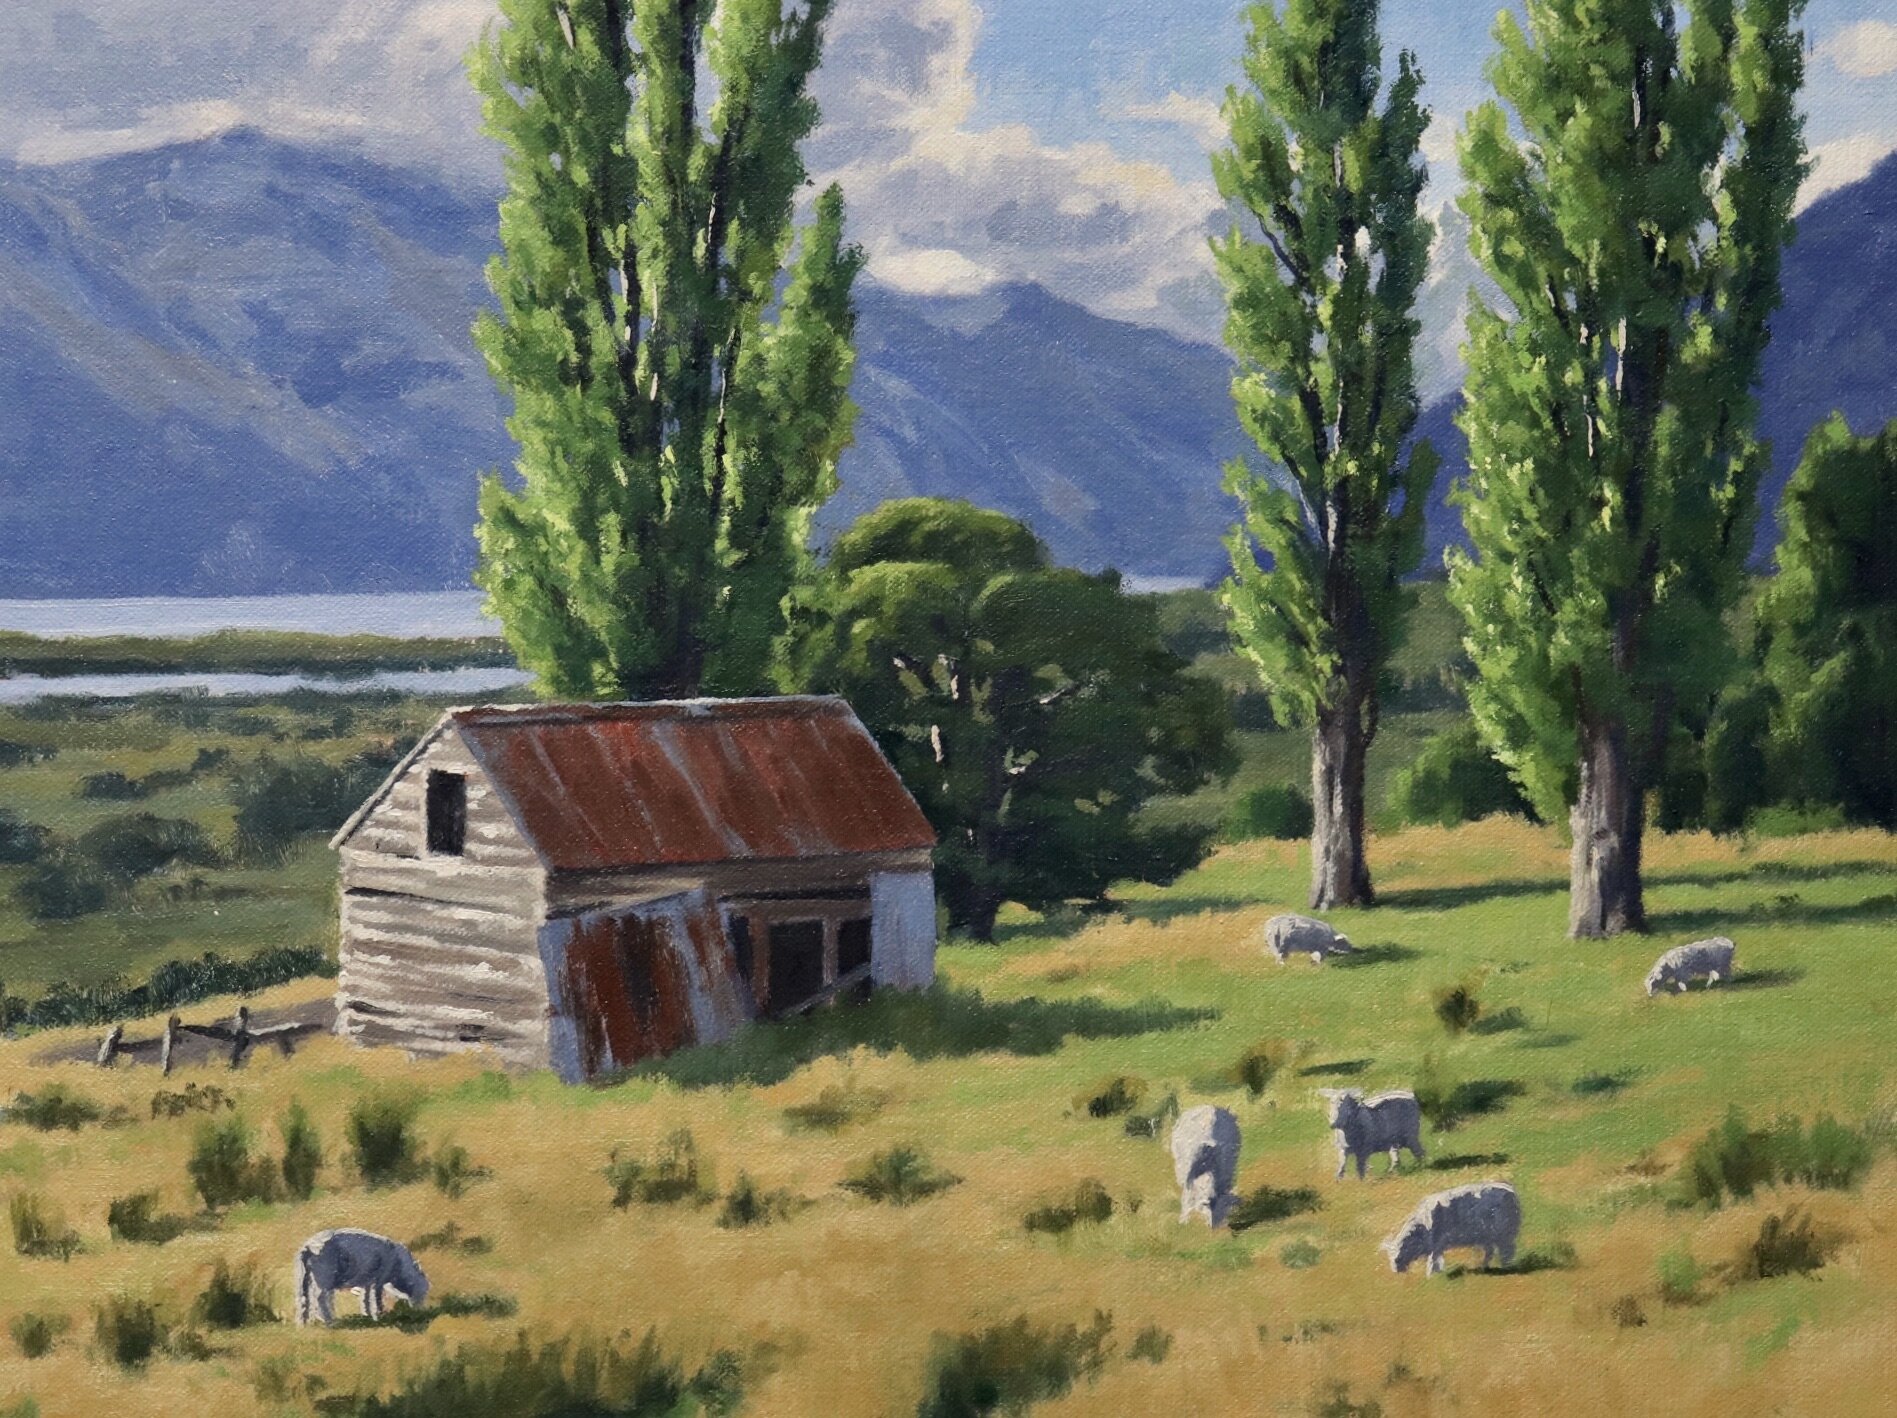 Old Barn - Glenorchy - Oil Painting - Samuel Earp copy.jpeg